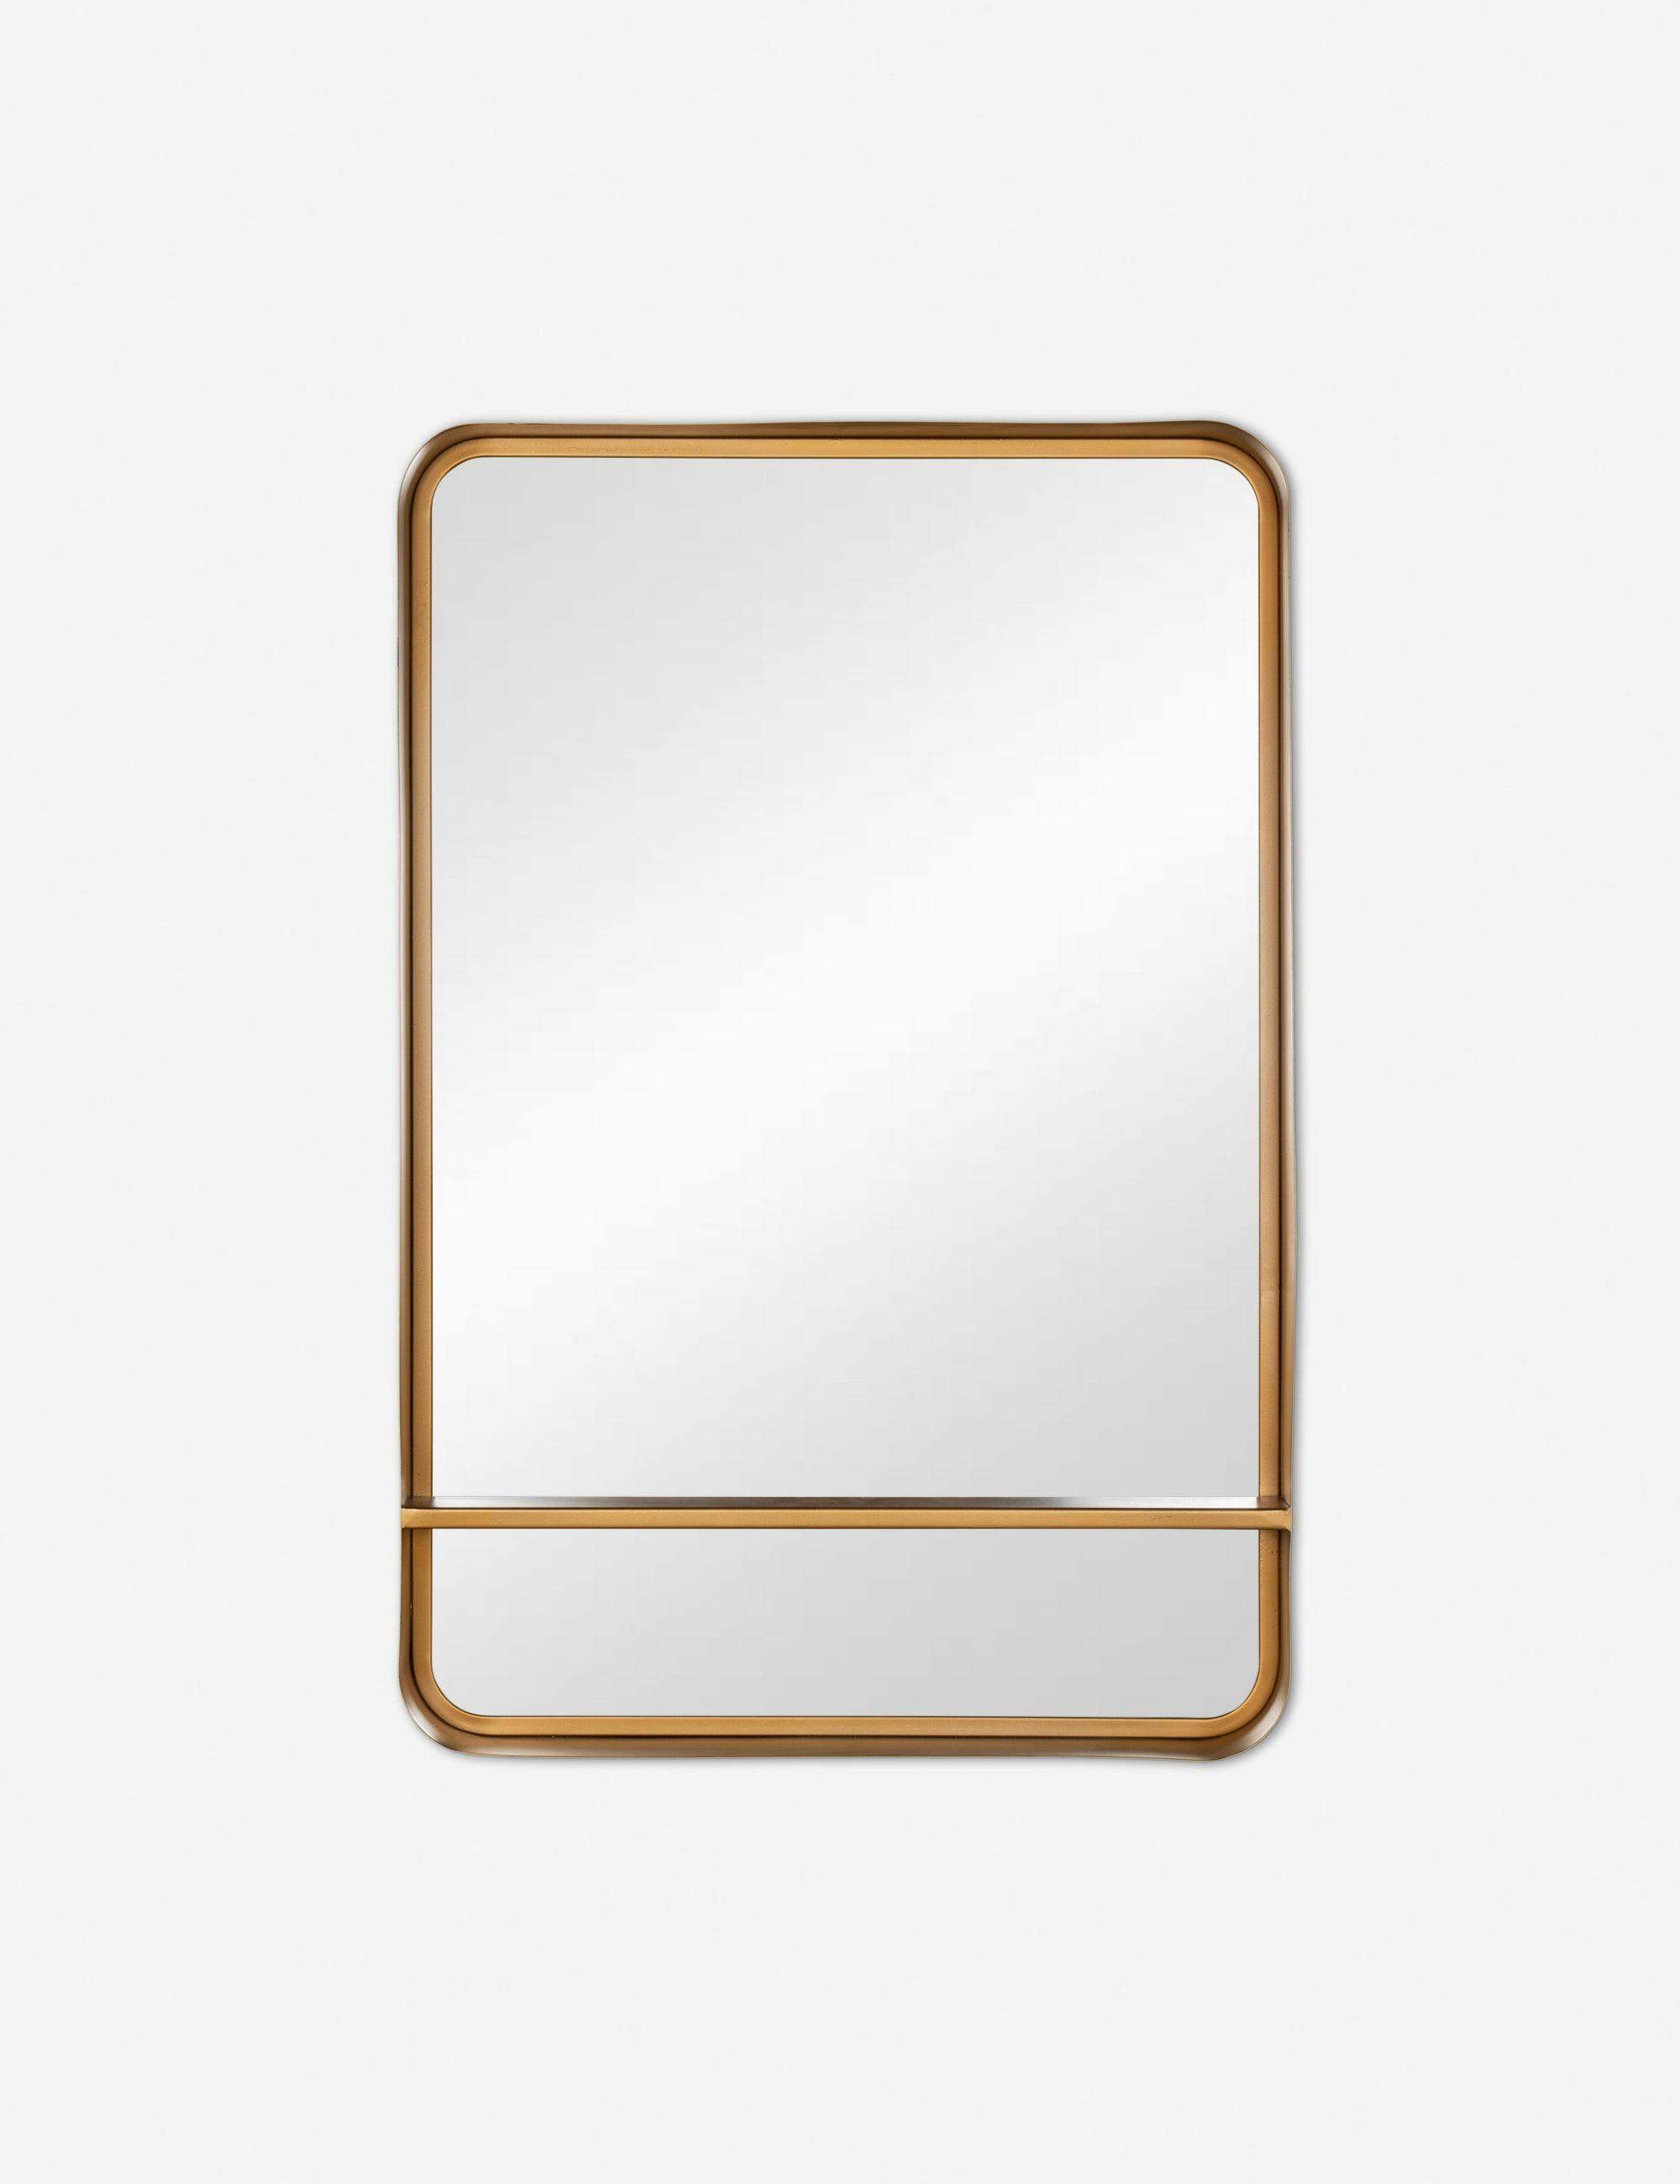 Elegant Rectangular Bronze and Gold Wood Bathroom Vanity Mirror with Shelf